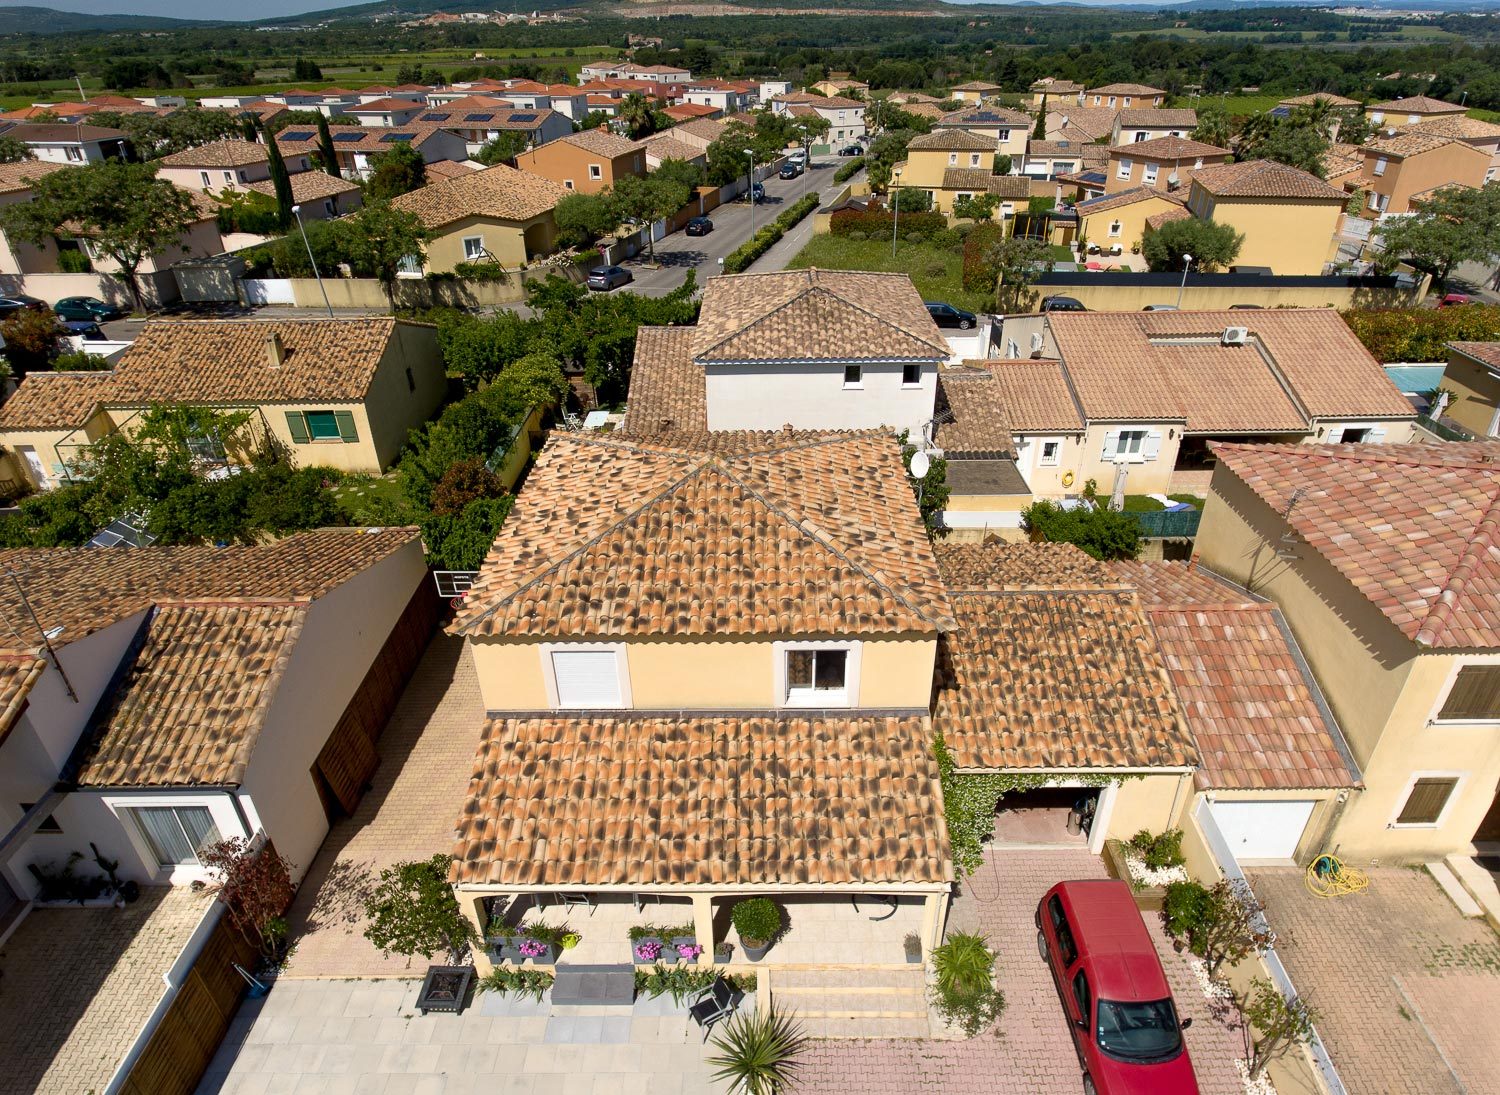 agence immobiliere photo par drone Montpellier Nimes Beziers Hérault Gard Occitanie